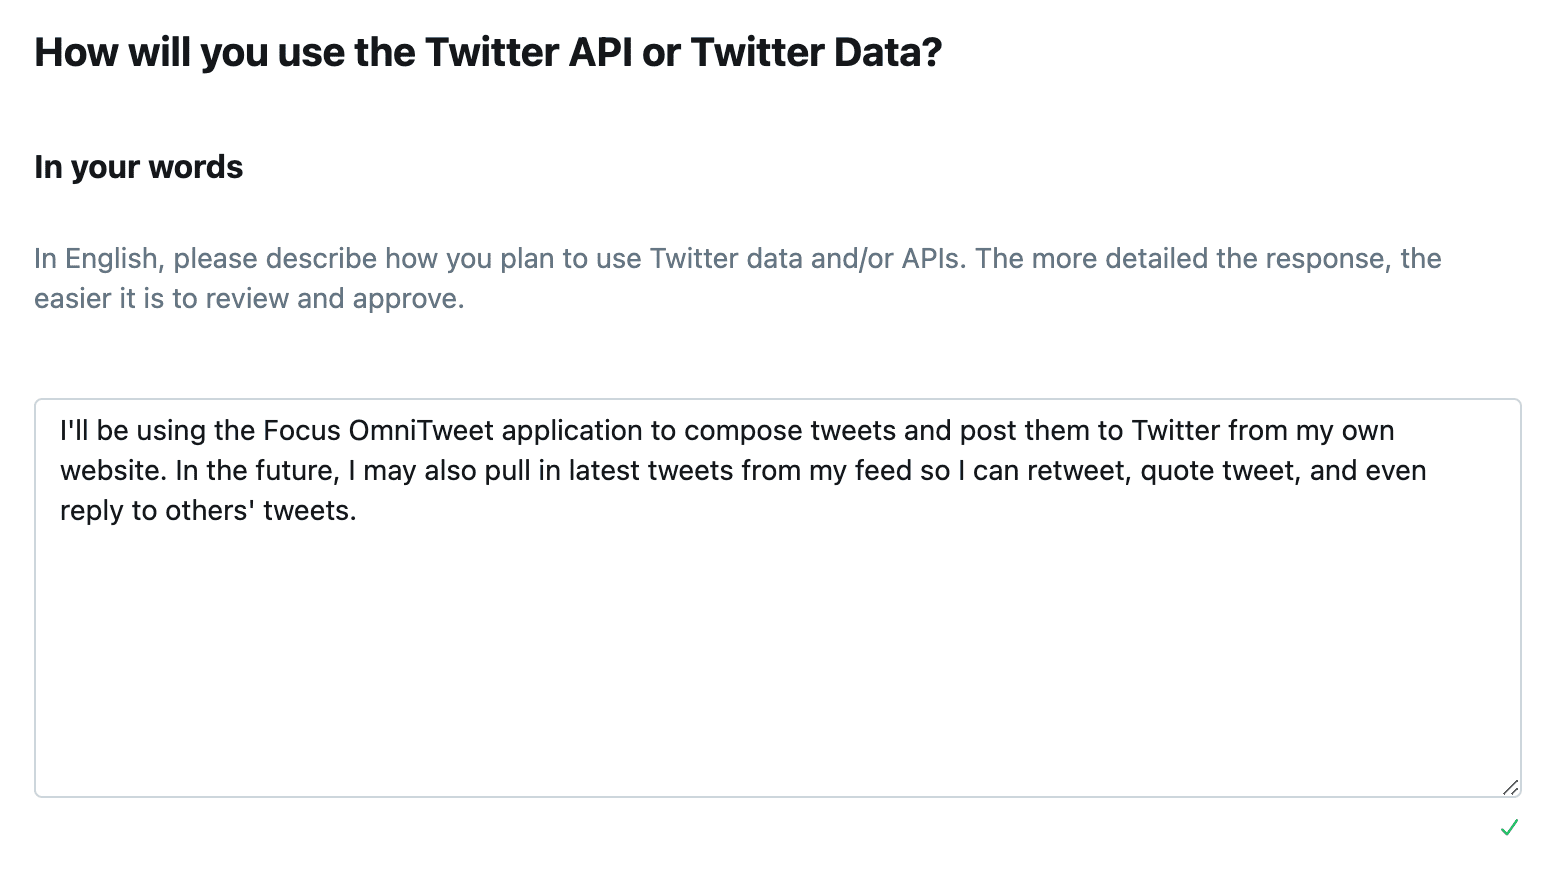 Twitter API: Intended Use